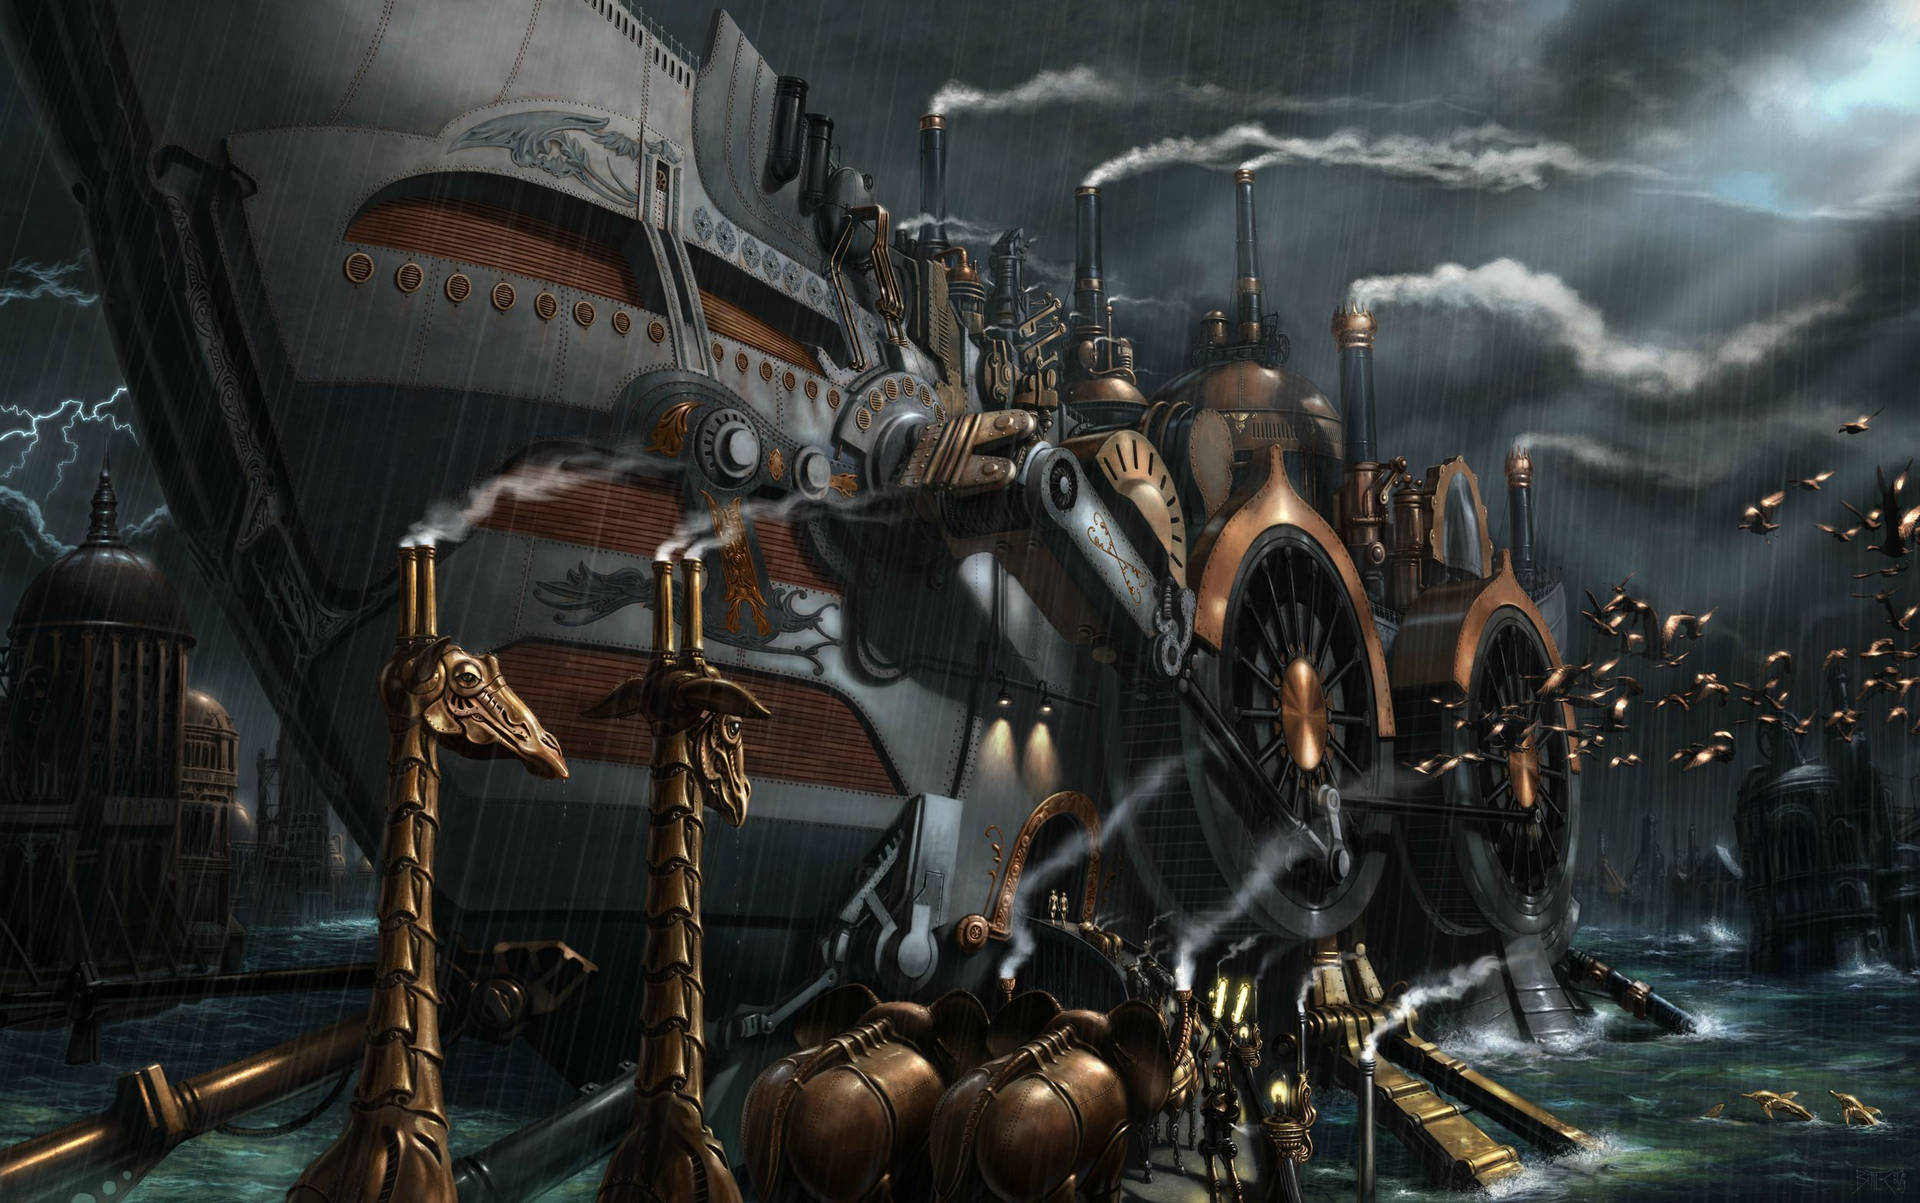 Mesmerizing Ship in the Steampunk Fantasy World Wallpaper